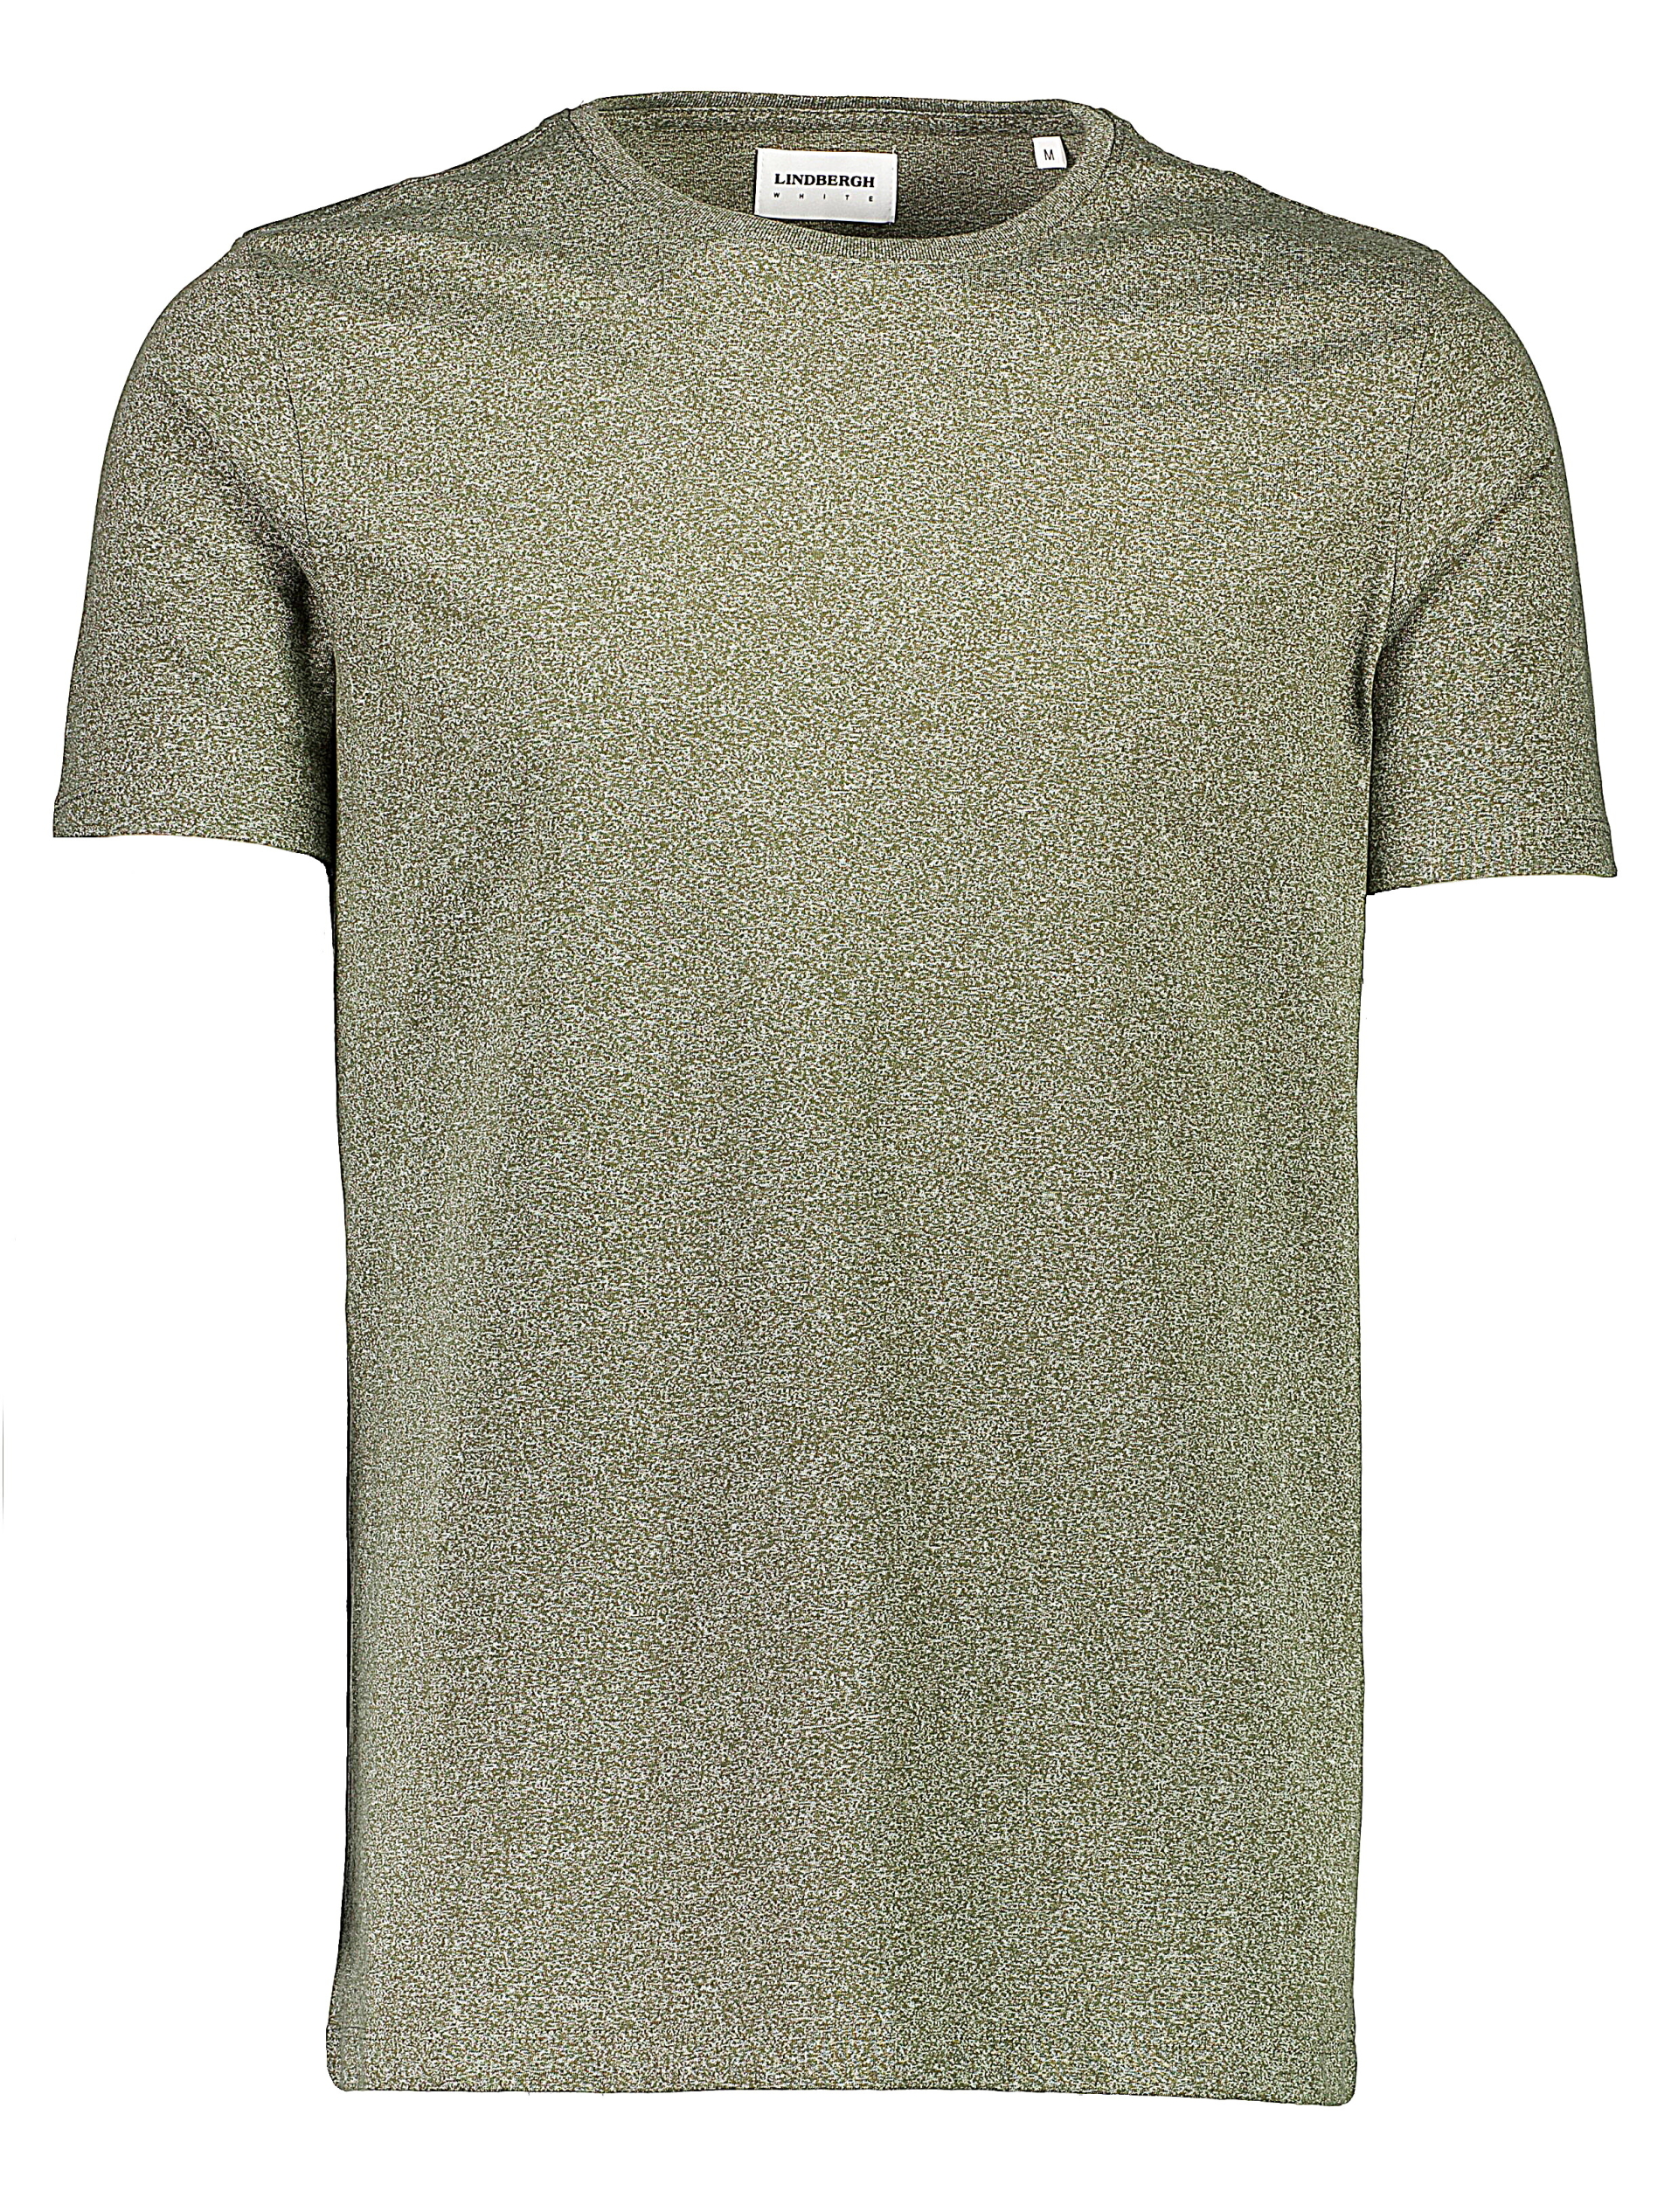 Lindbergh T-shirt grön / deep army mix